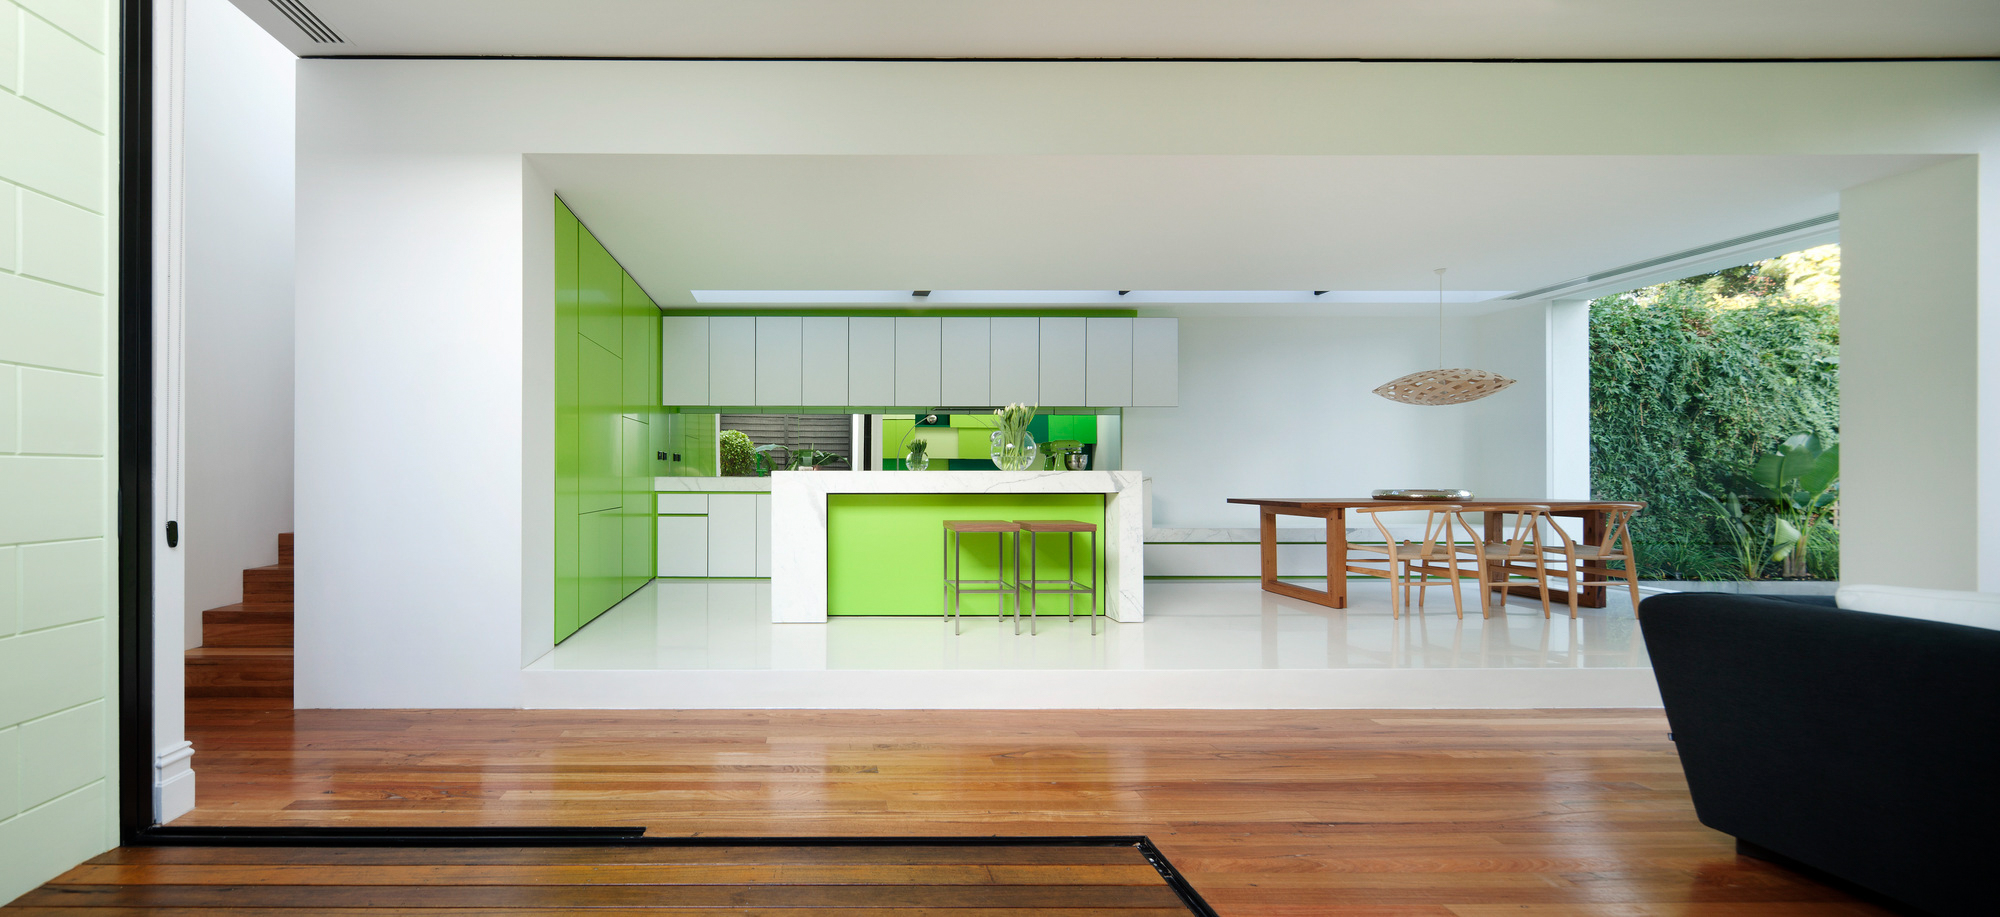 Shakin Stevens Green Space House - Melbourne, Victoria, Australia